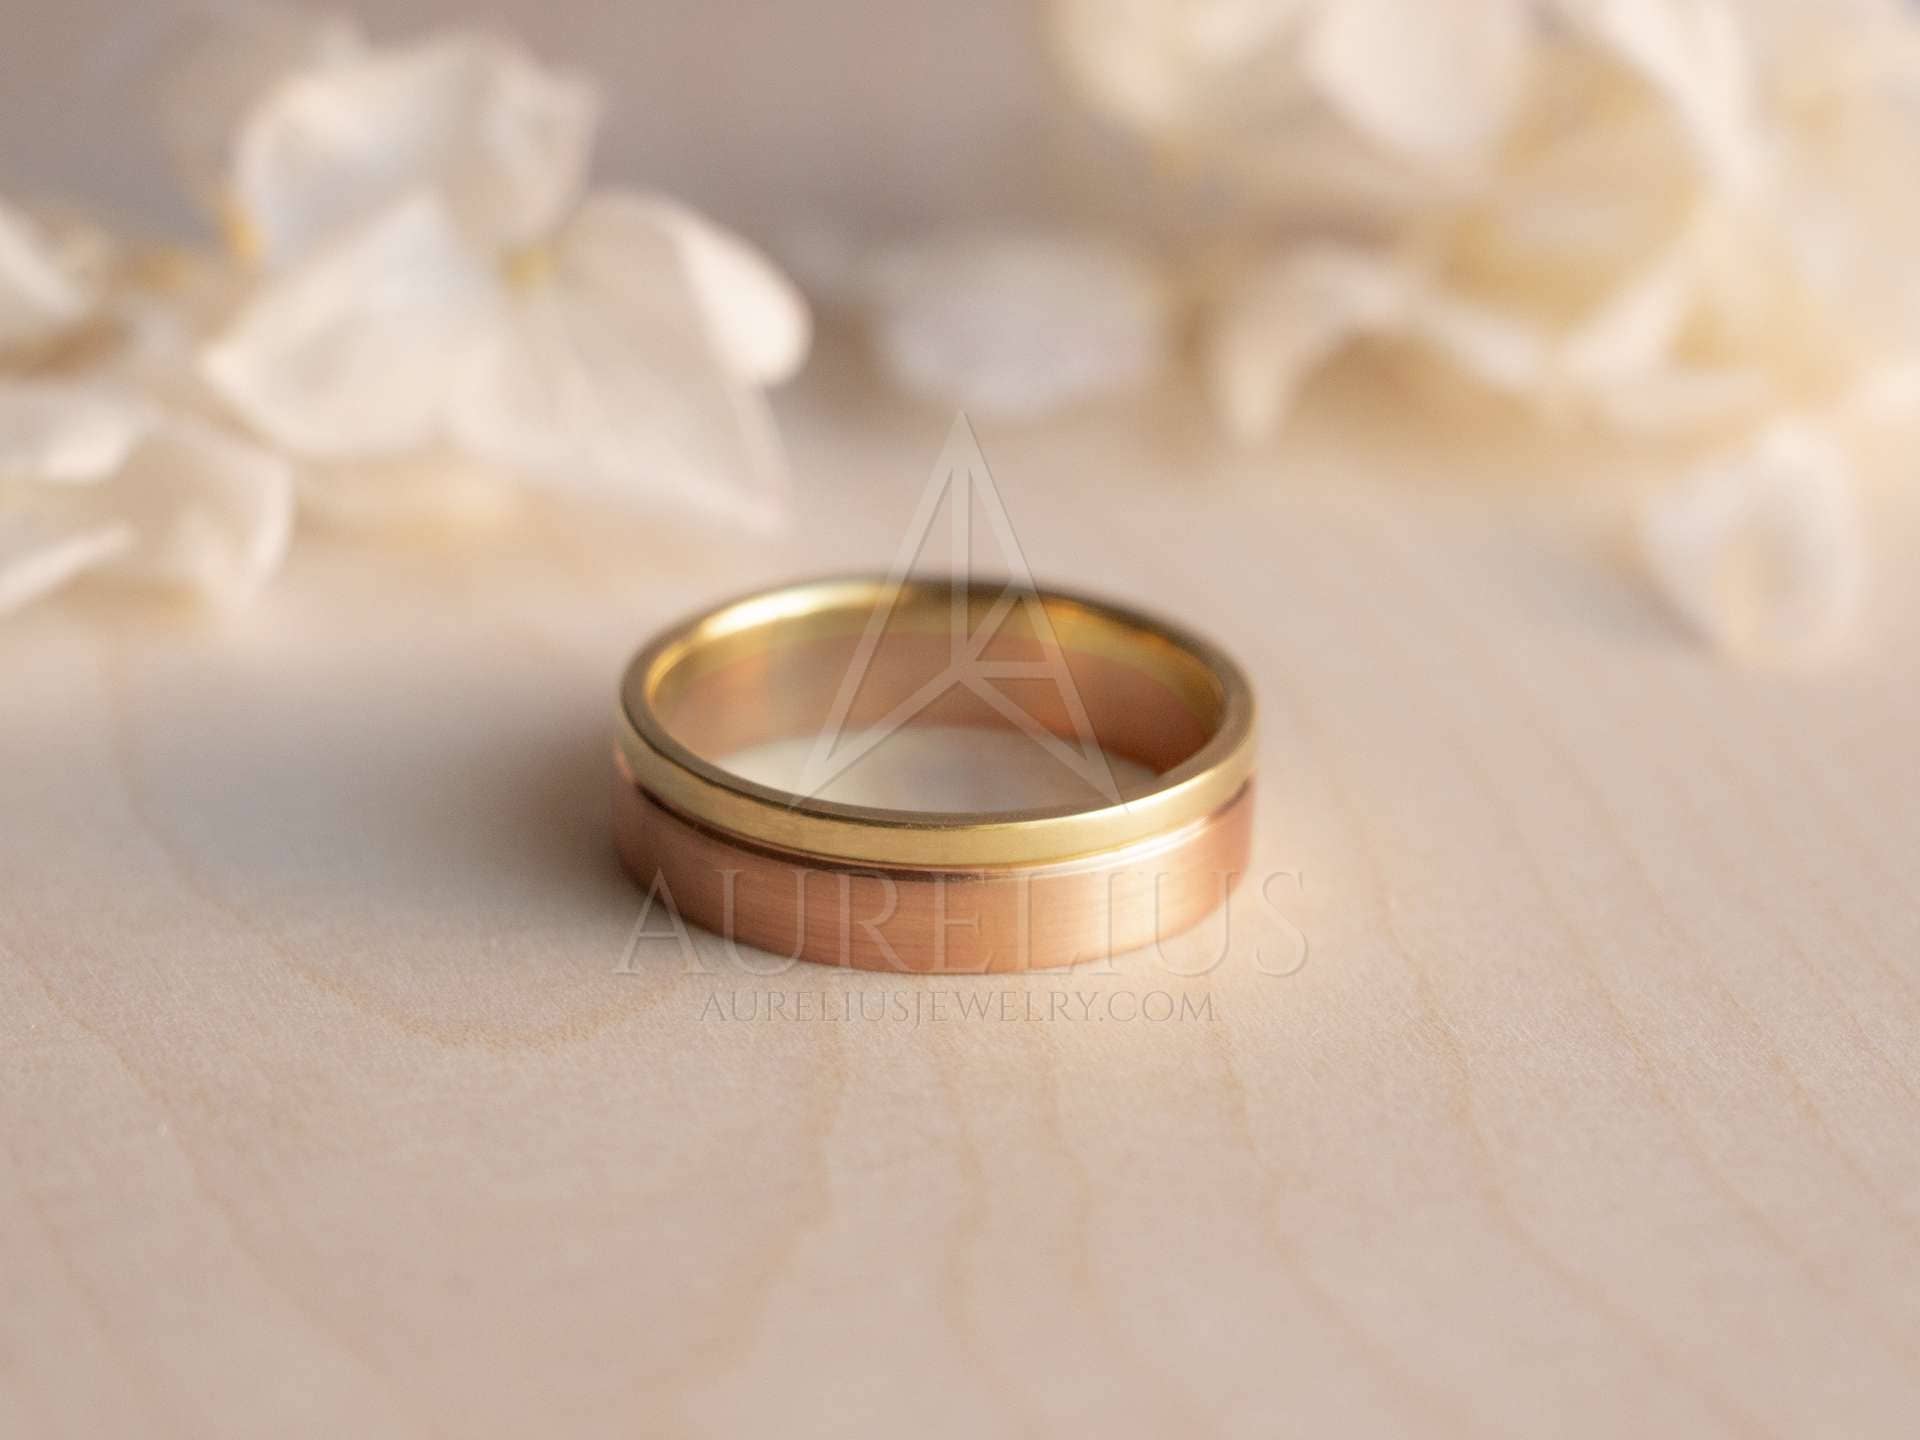 Two-Tone Wedding Rings 